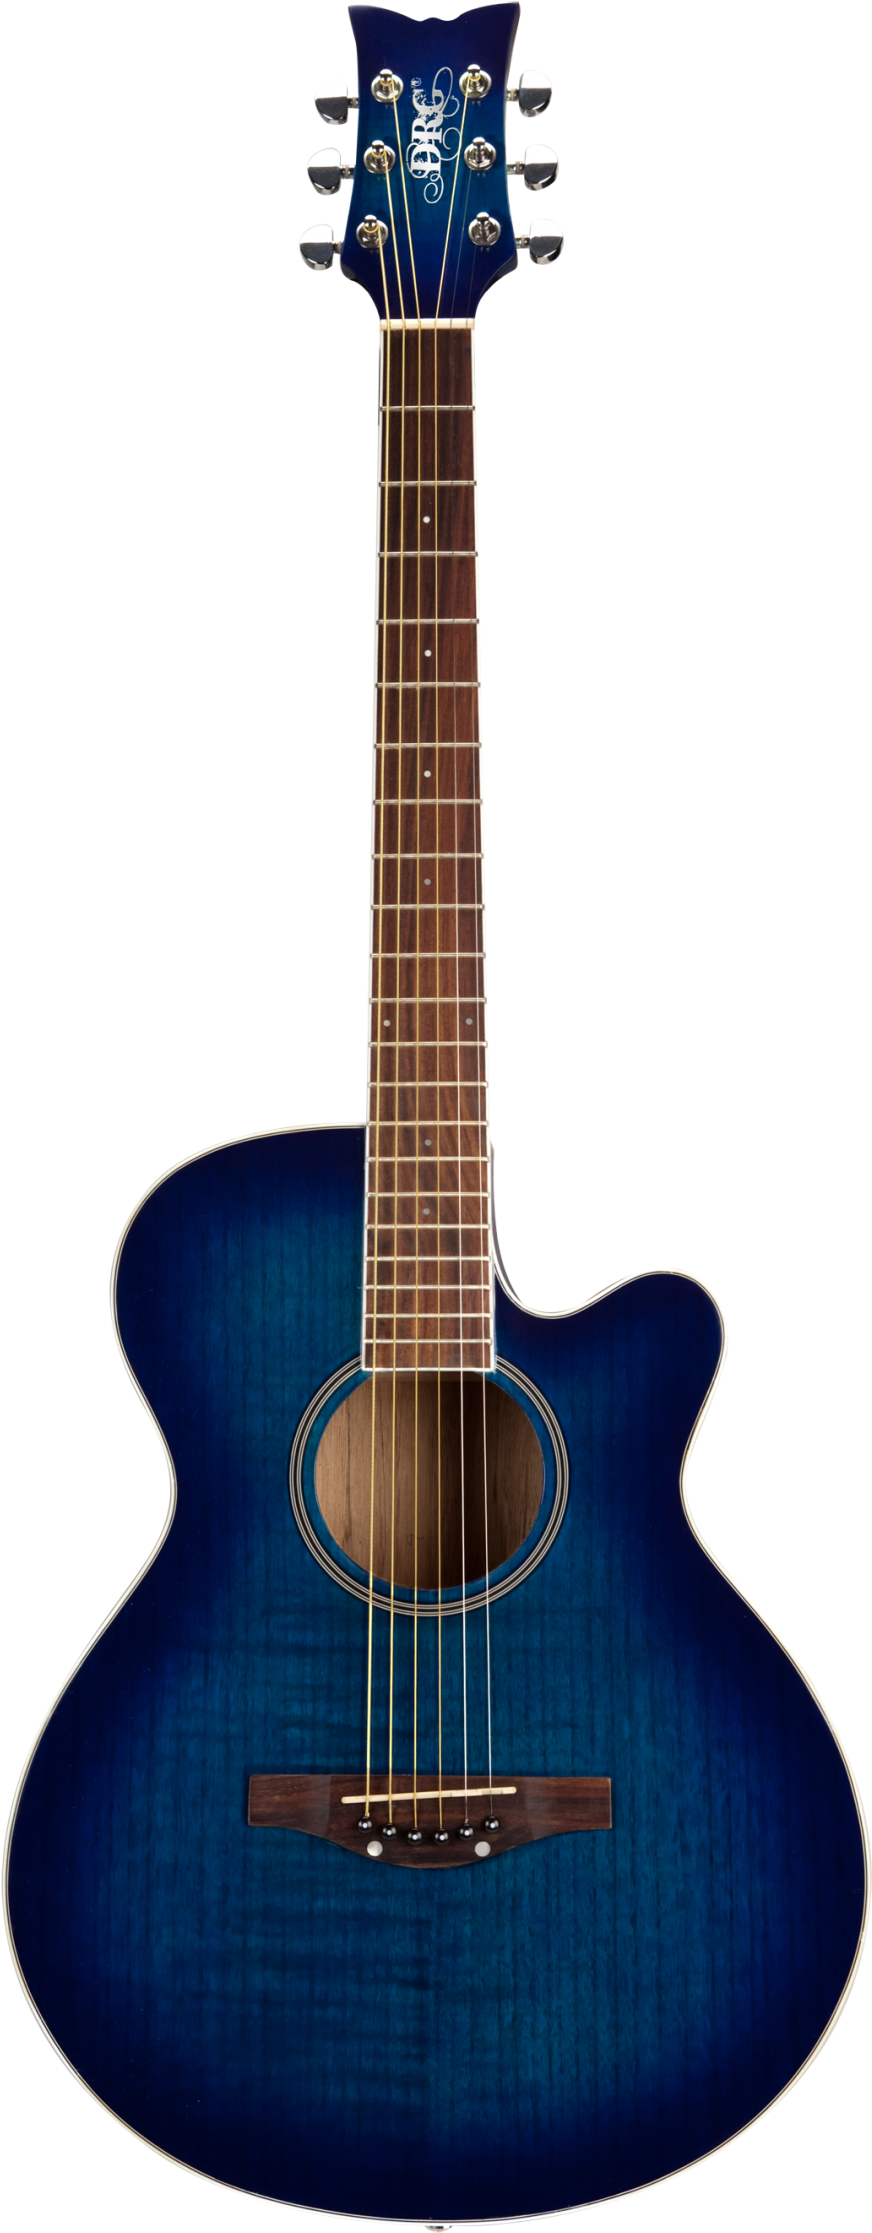 11 - Rock Guitars (885x2250)